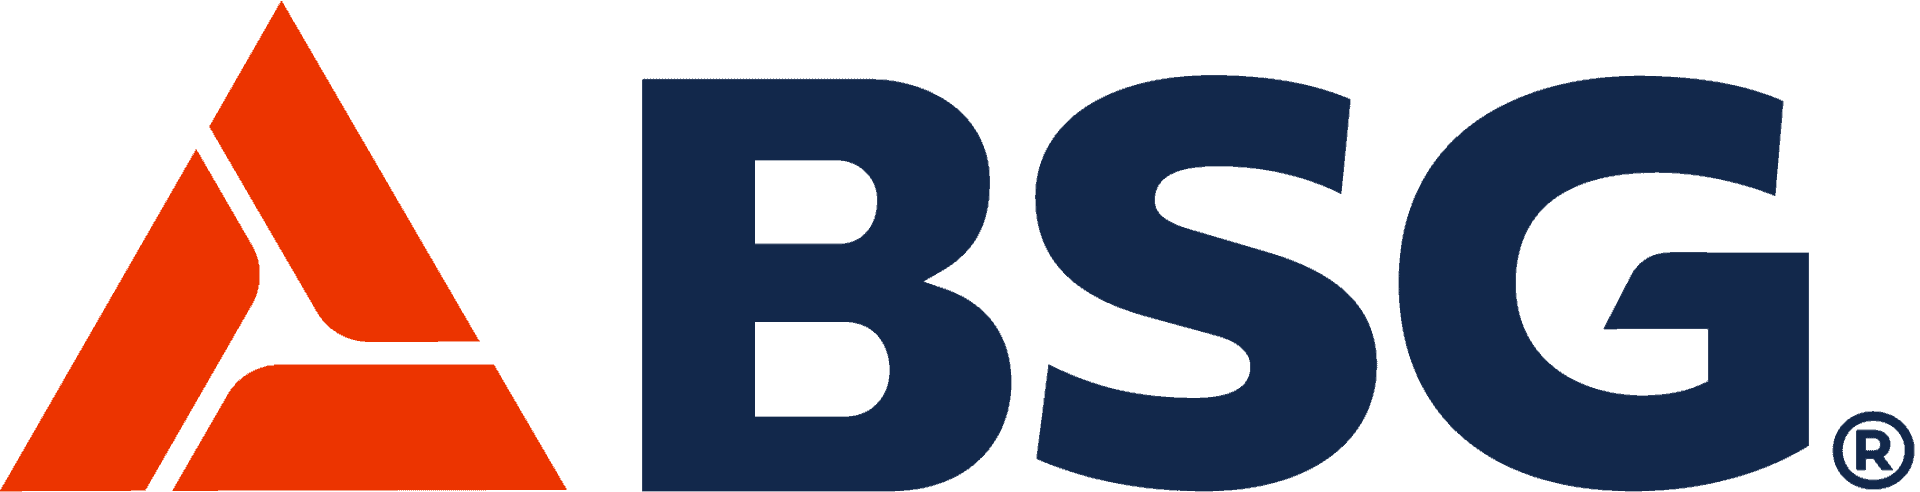 Logo Bsg